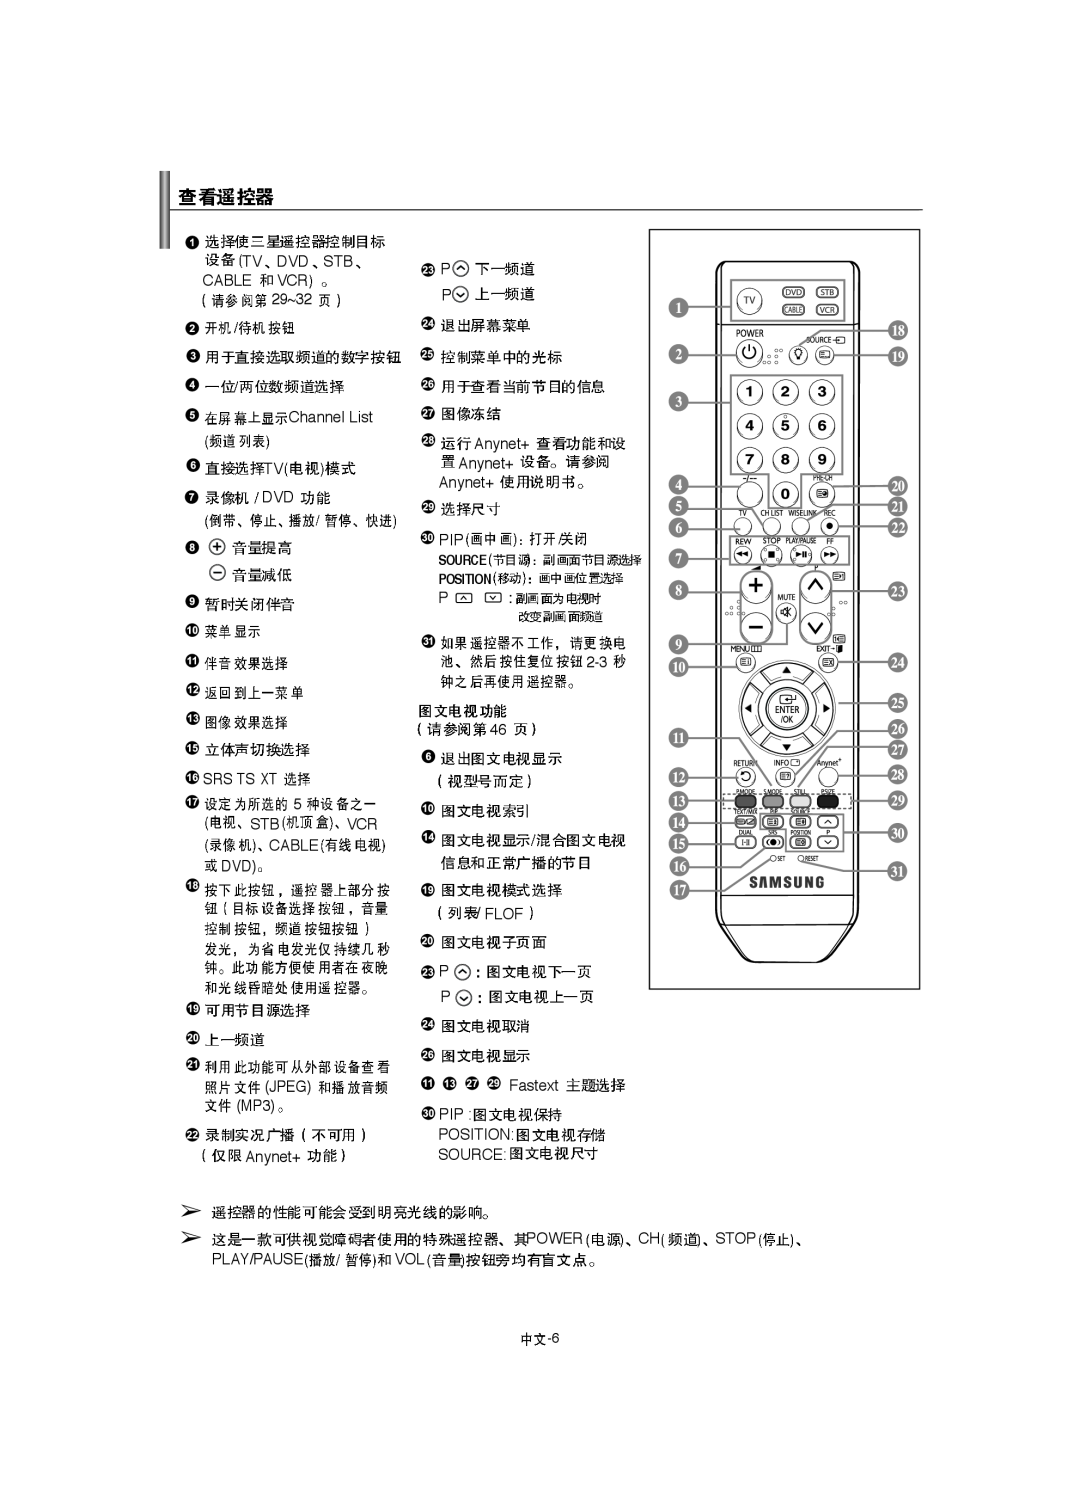 Samsung LA40F8, LA52F8, LA46F8 manual 29~32, Source, Position, Srs Ts Xt 